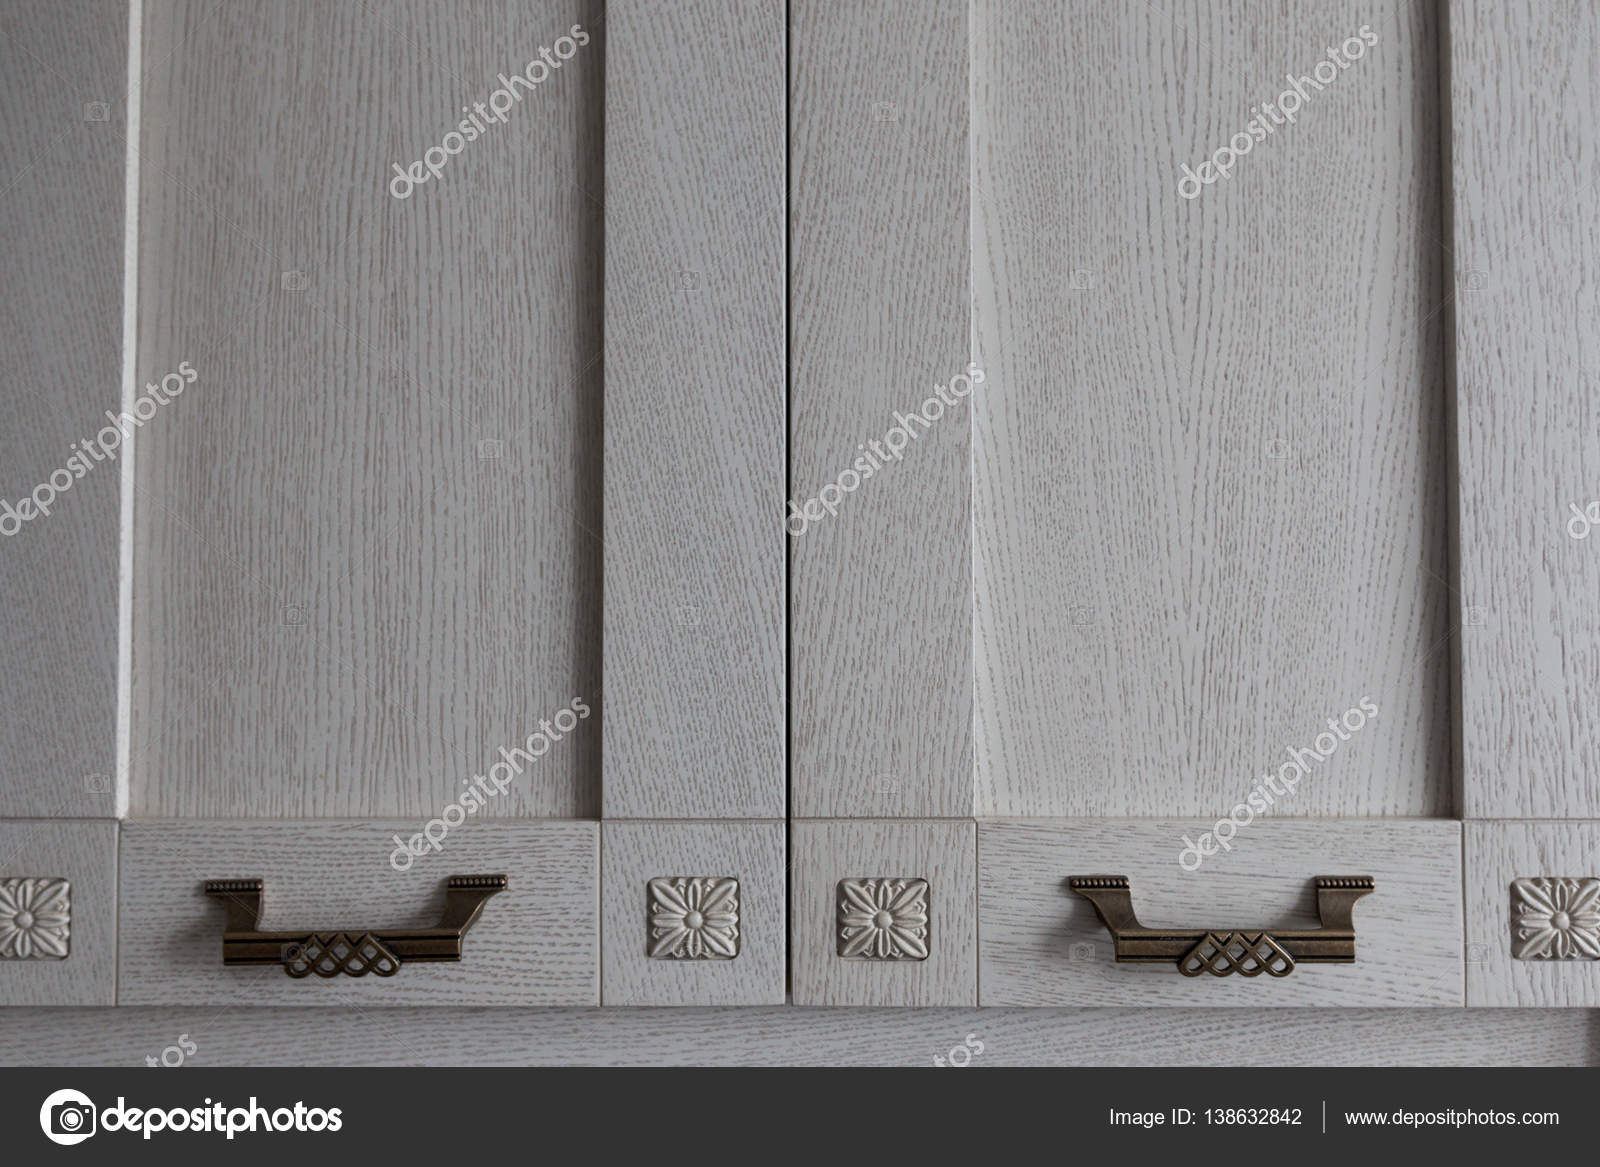 Wooden Cabinet Doors In The Kitchen Stock Photo C Evpv 138632842